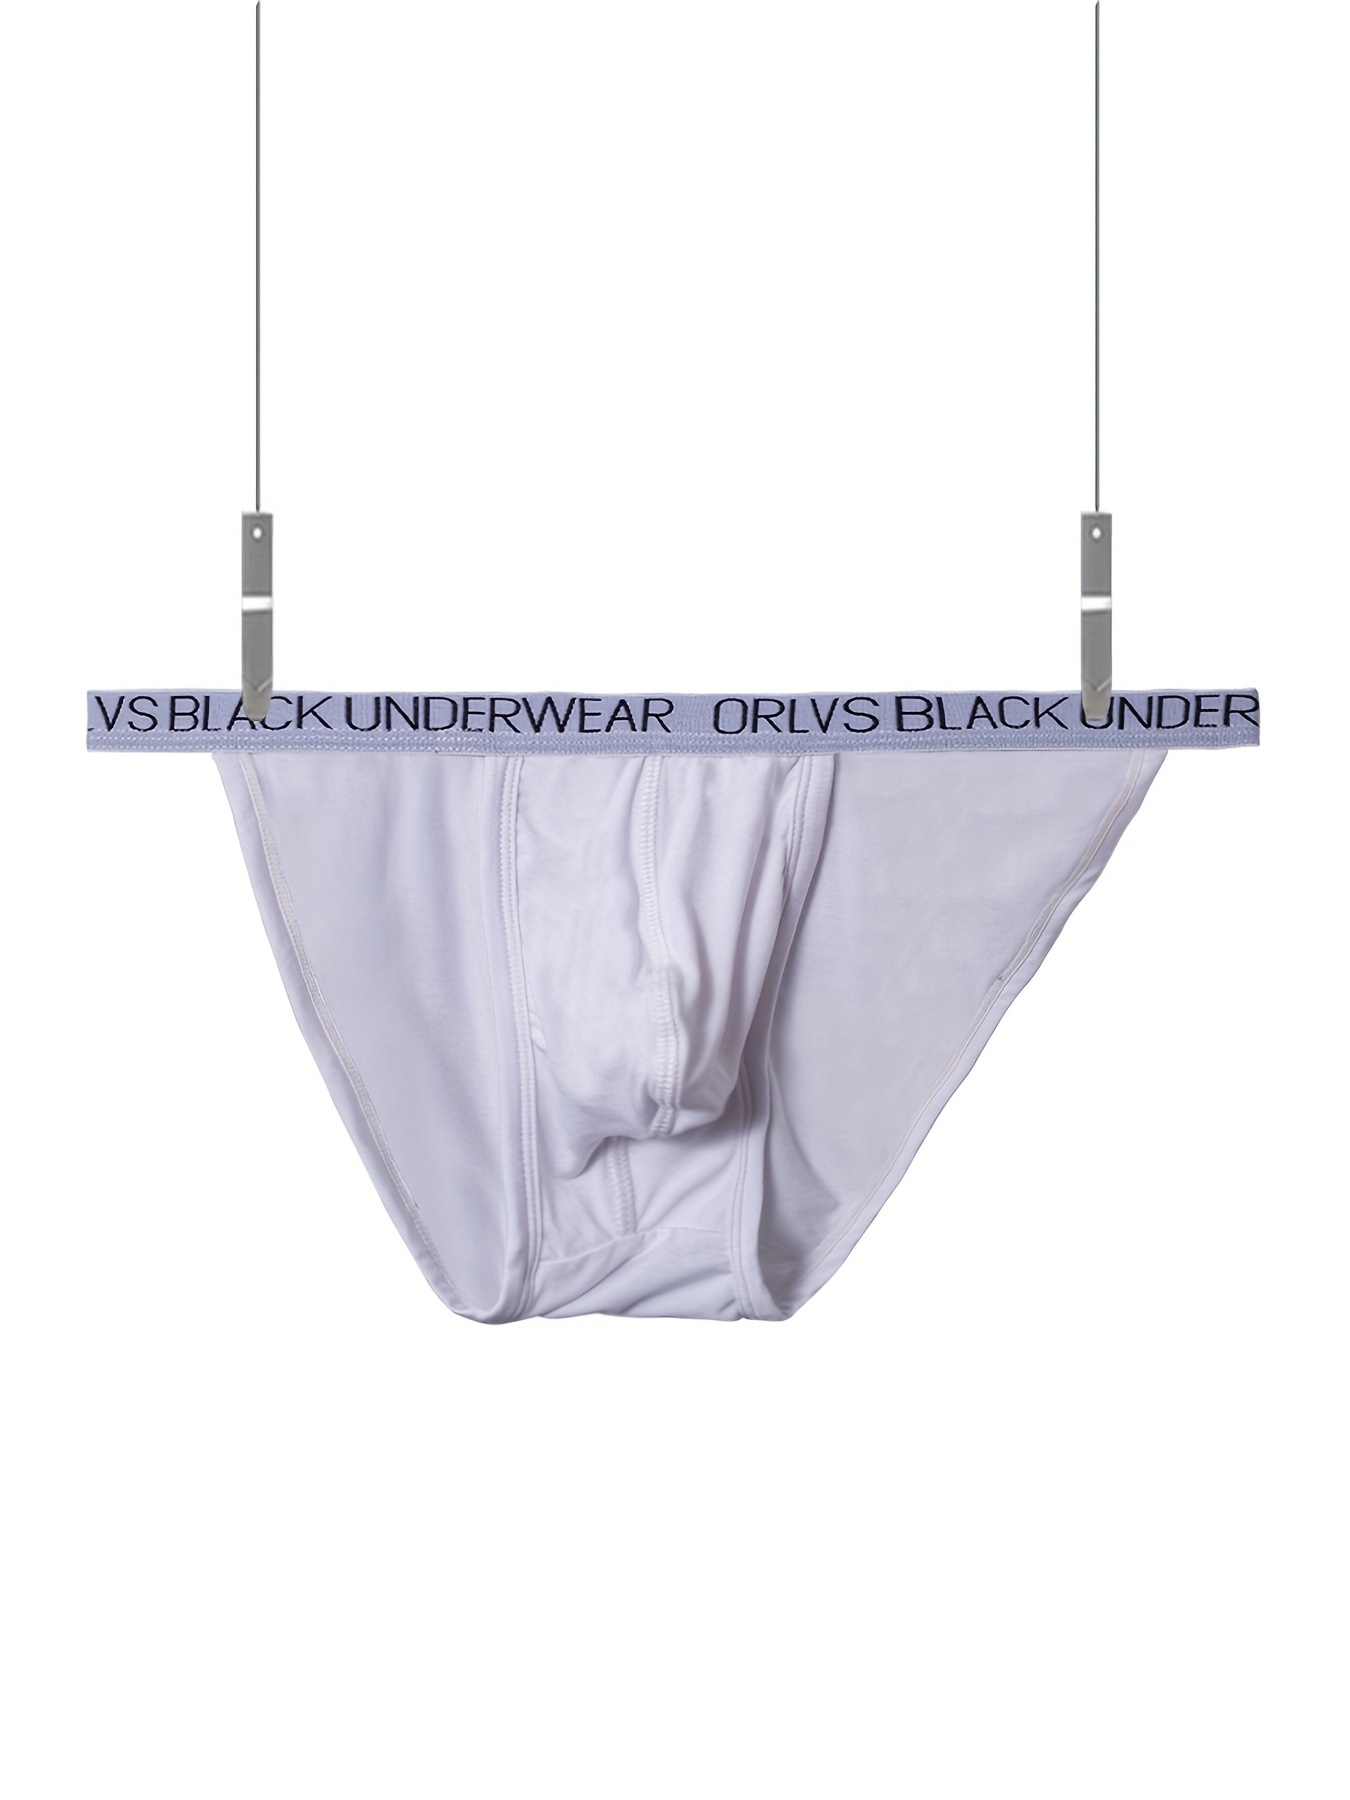 TIHLMK Men's Underwear Low Waist Fashion Color Stripes Comfortable Thong 